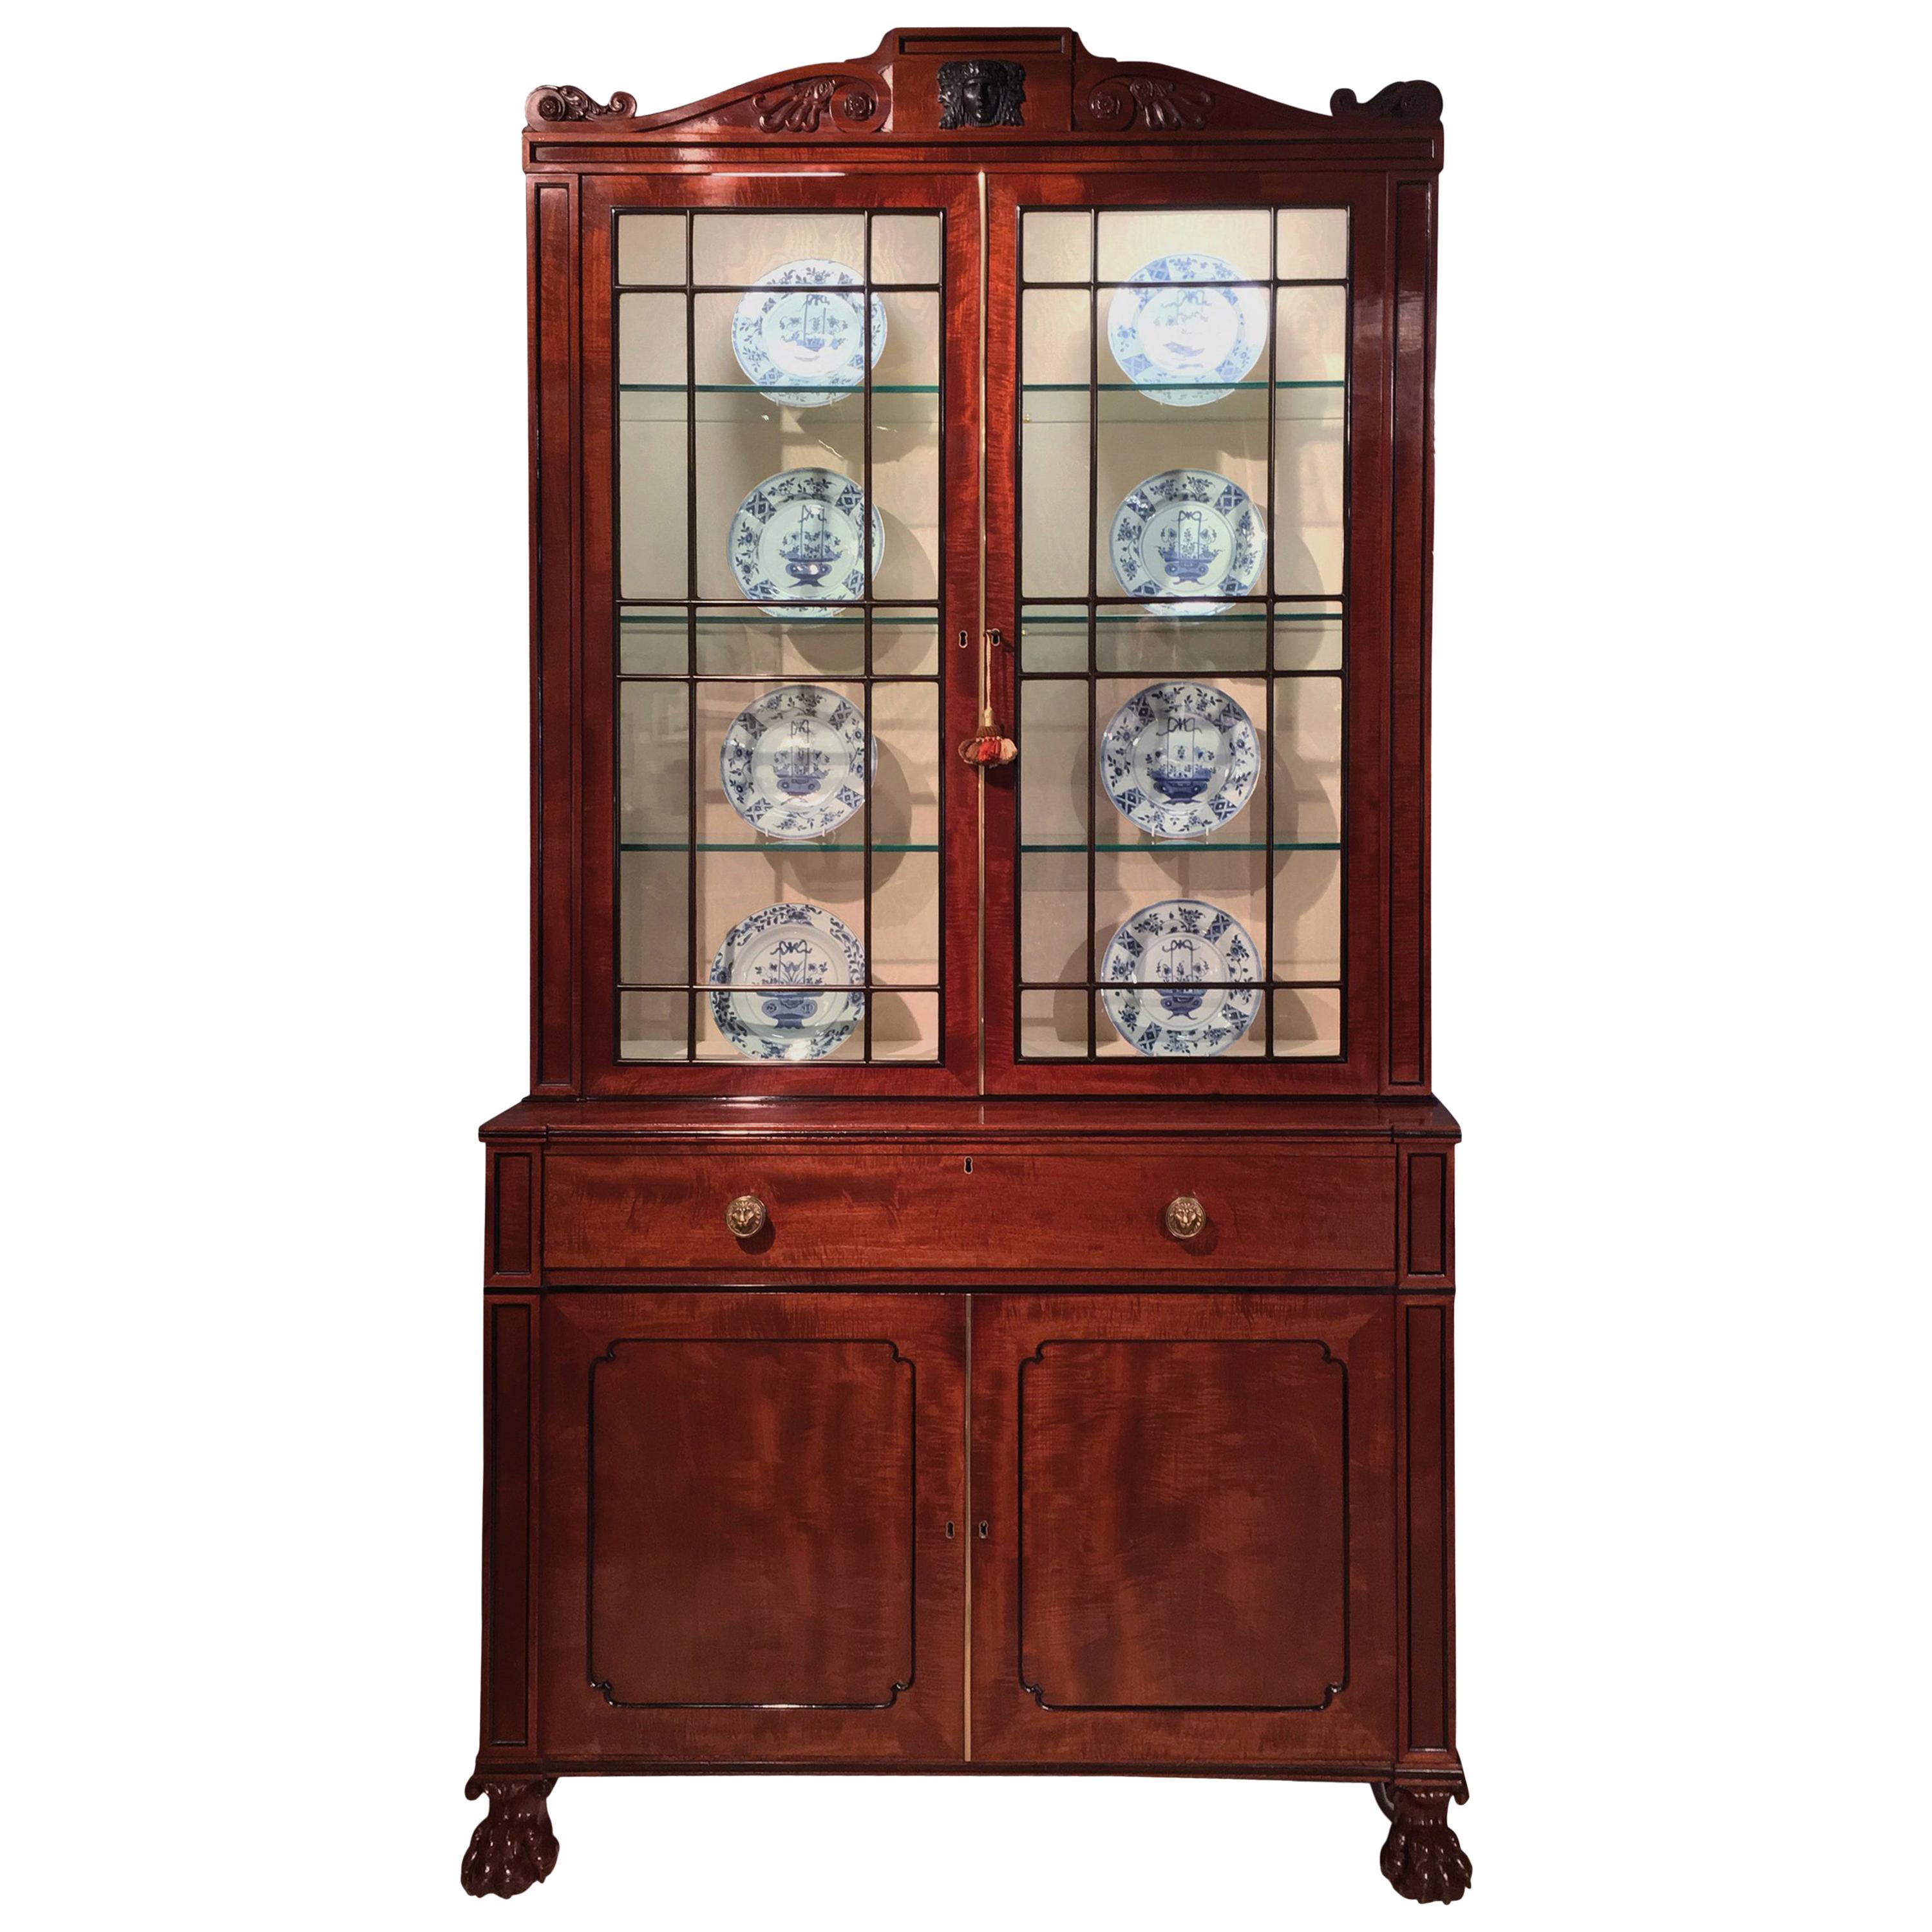 Regency Period Mahogany Secretaire Bookcase, Designs by Thomas Hope